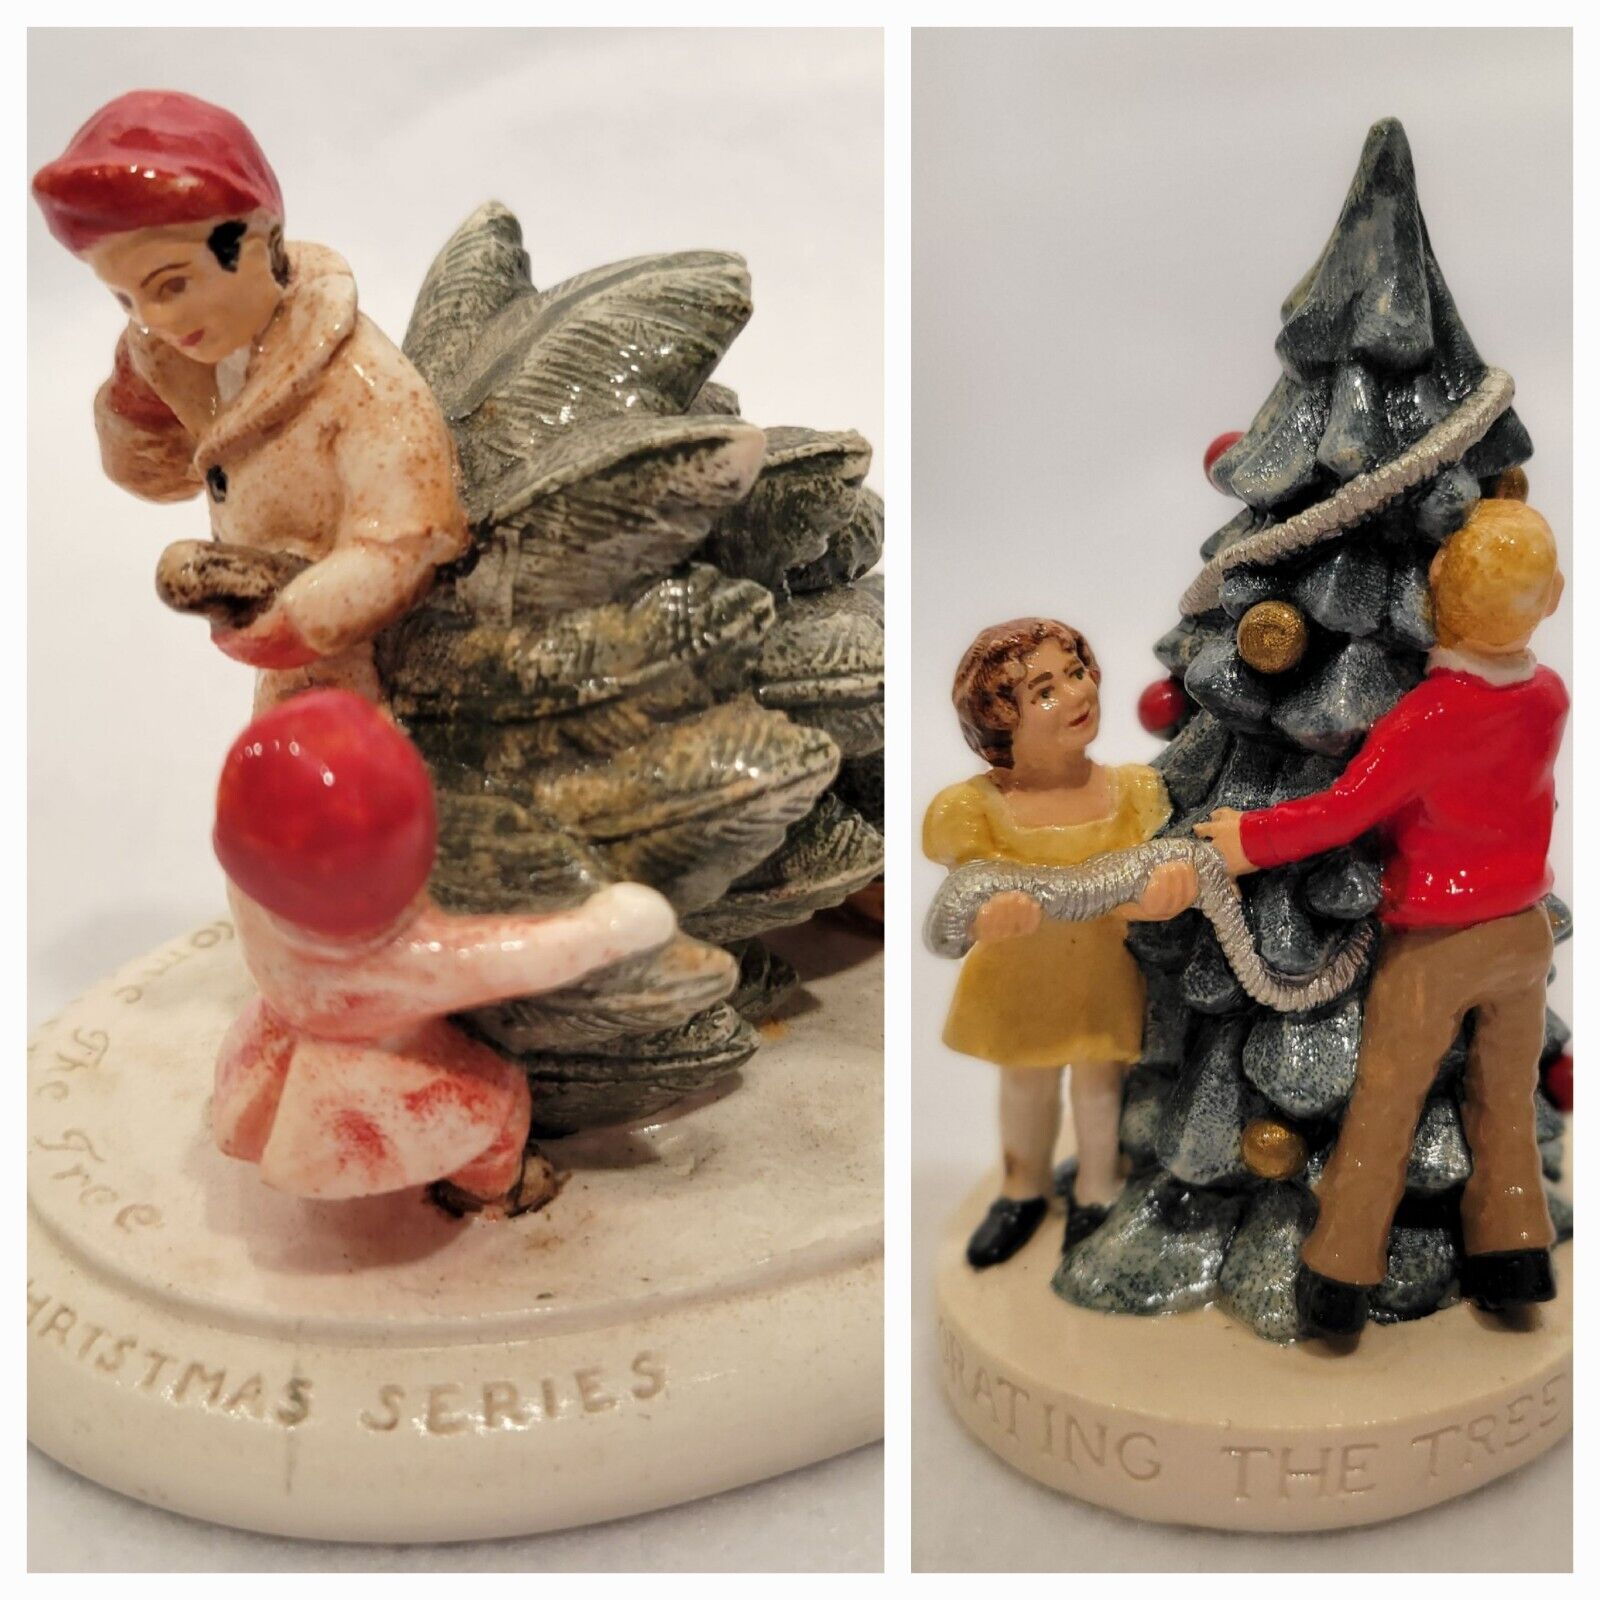 Vtg Sebastian Miniatures: Bringing Home the Tree & Decorating the Tree NOS